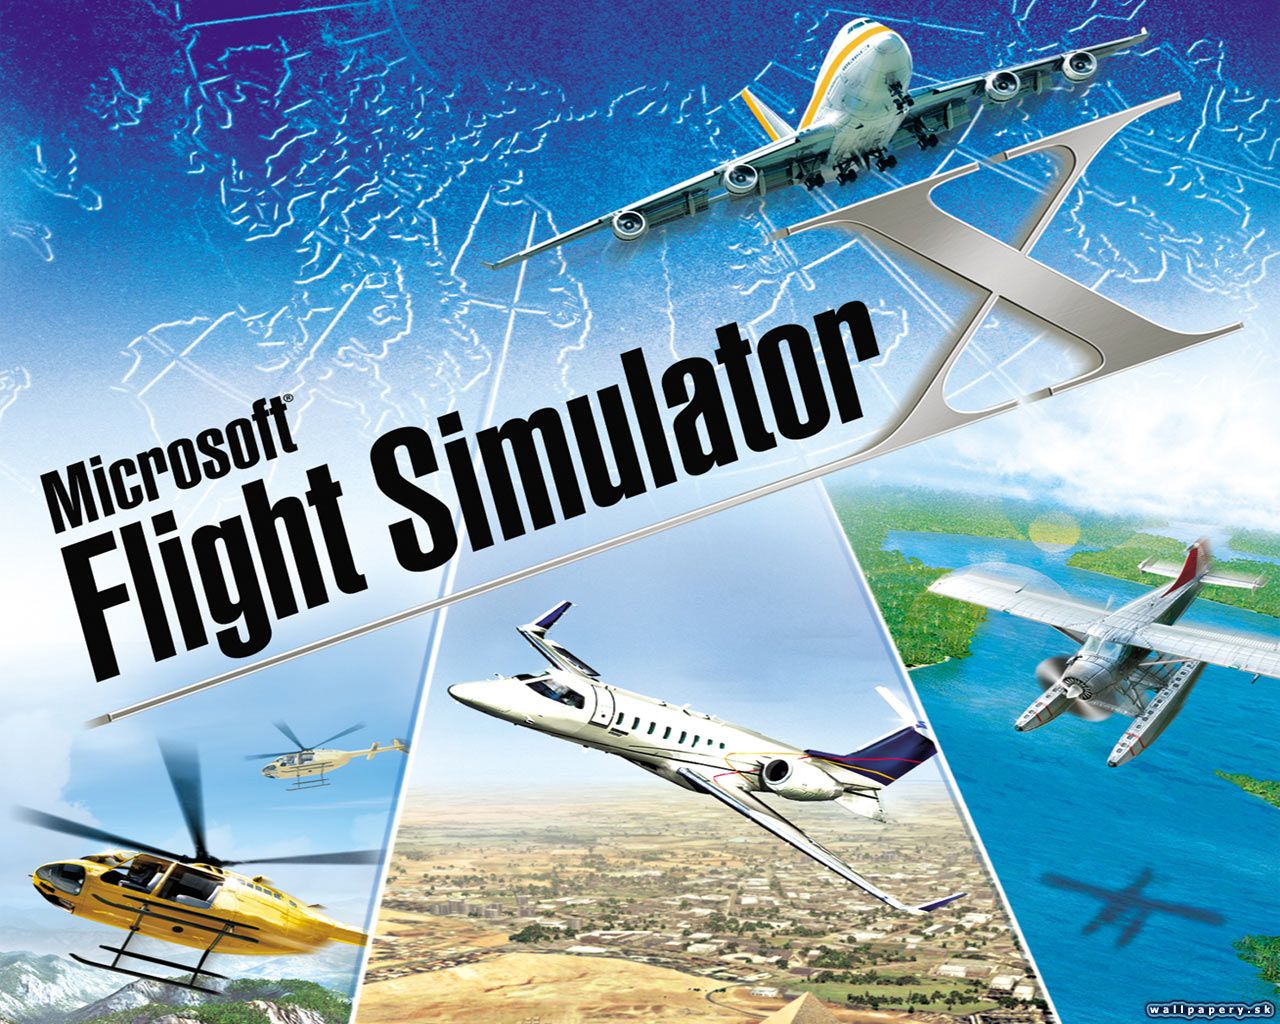 Microsoft Flight Simulator X Background